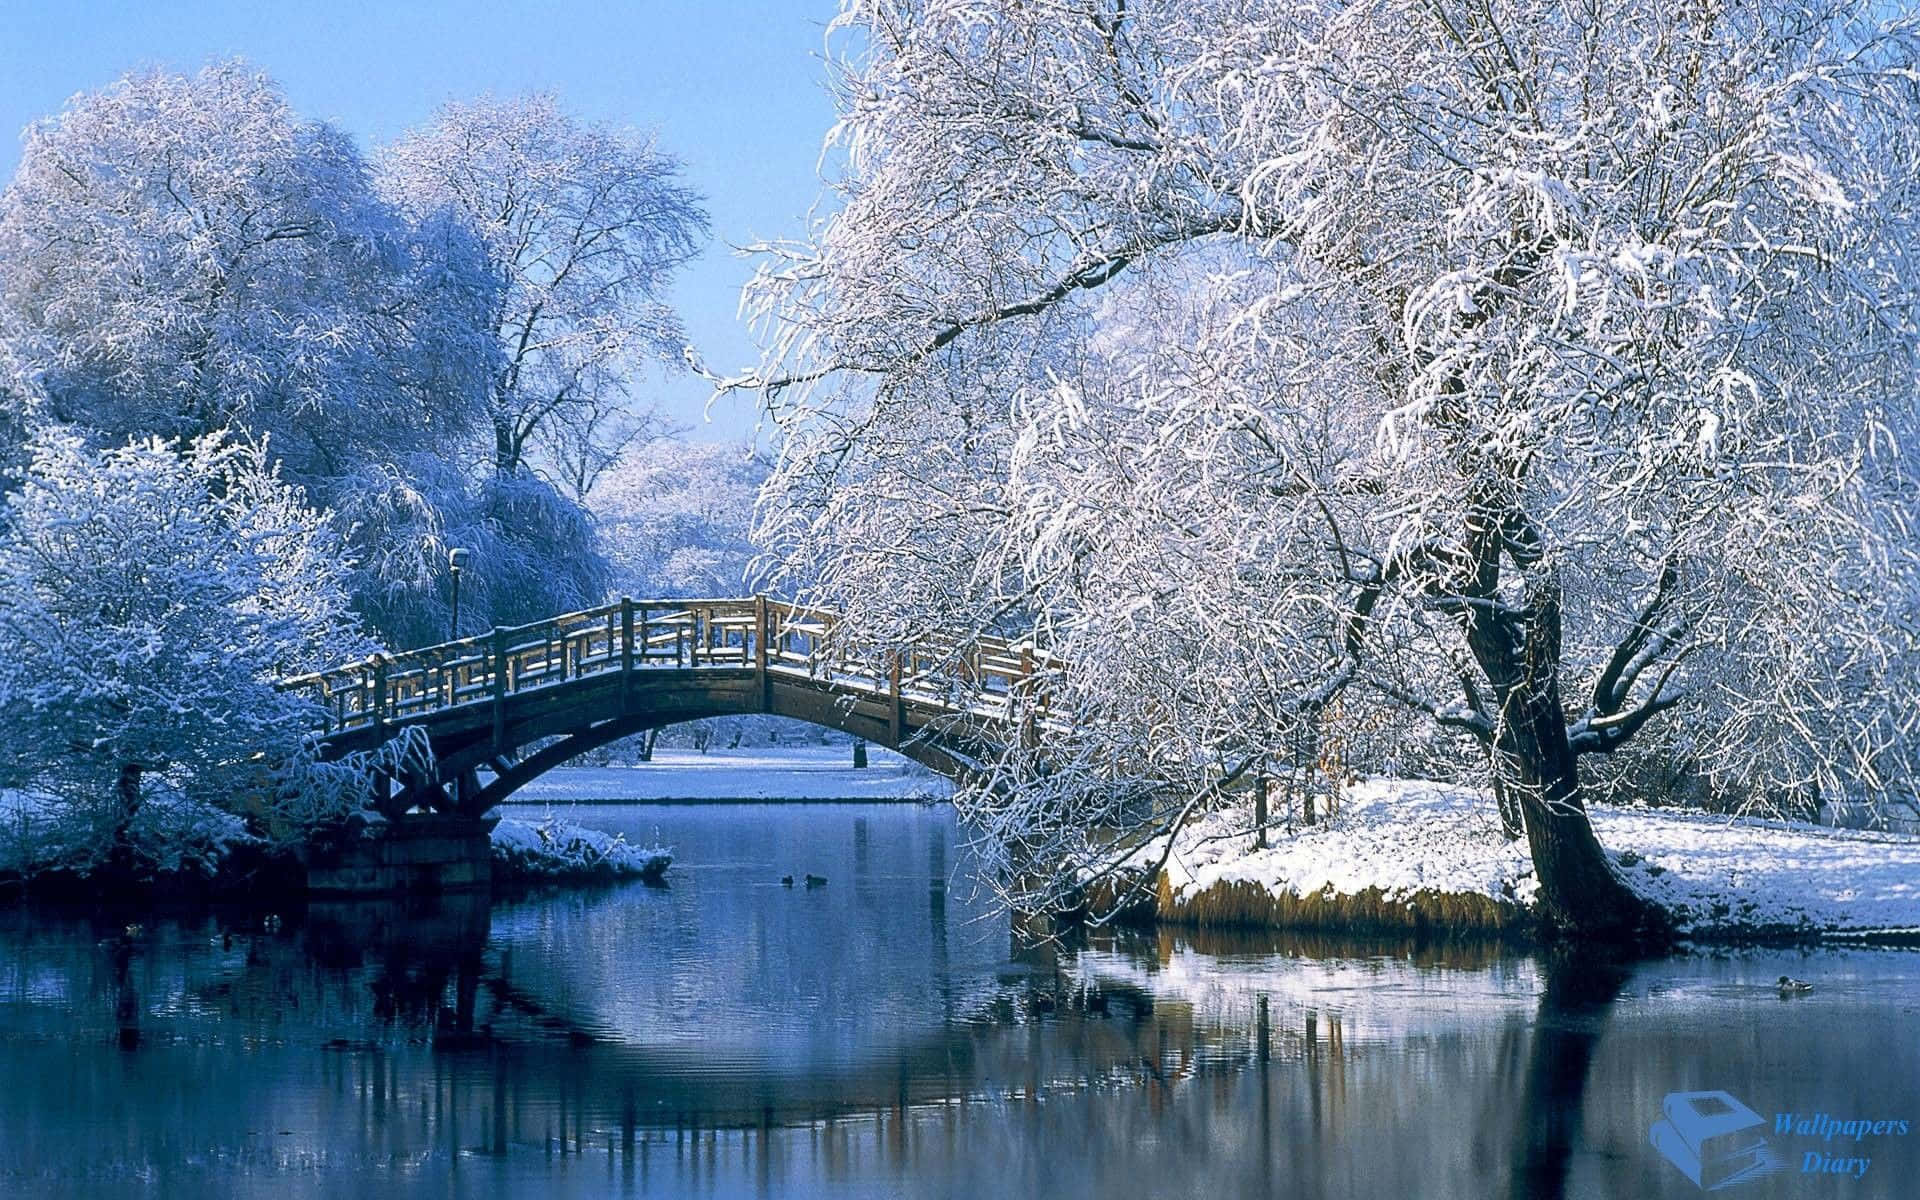 "Beautiful Scenery of Winter Wonderland"